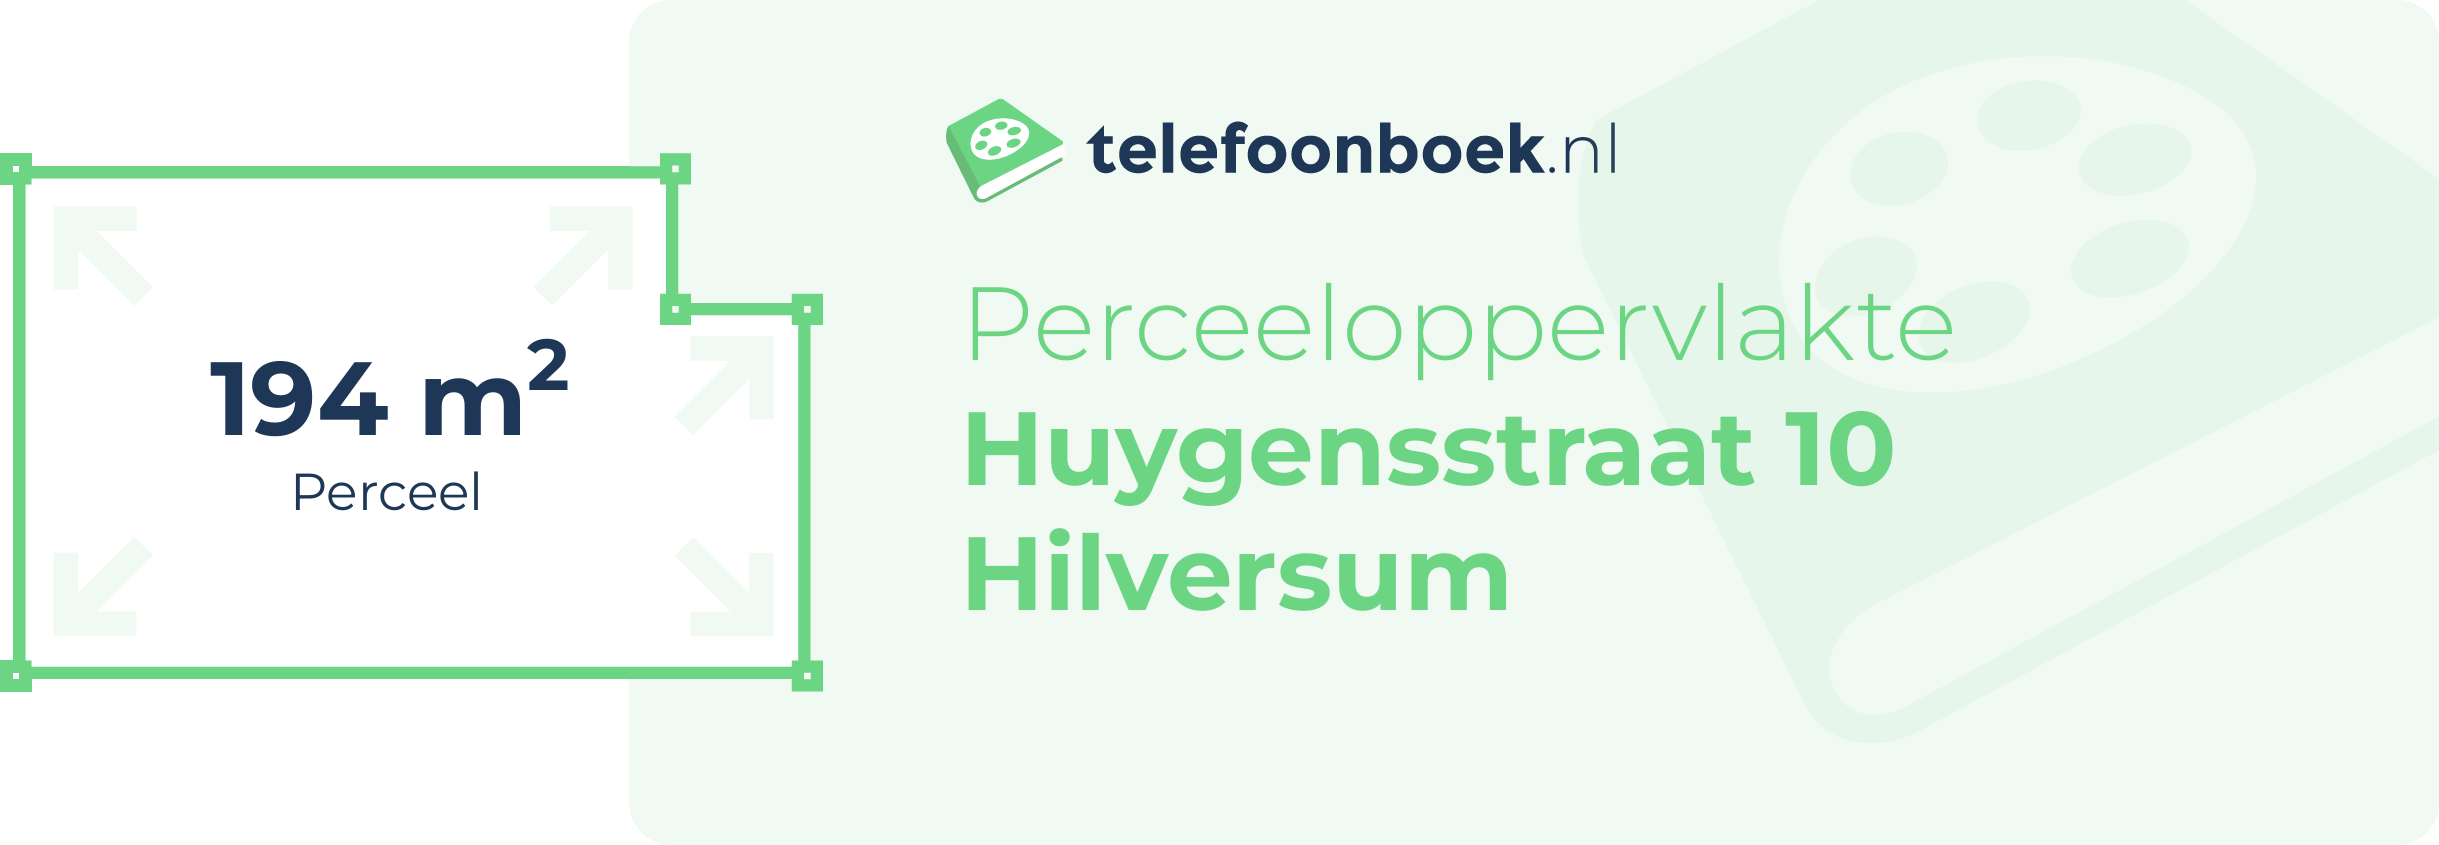 Perceeloppervlakte Huygensstraat 10 Hilversum